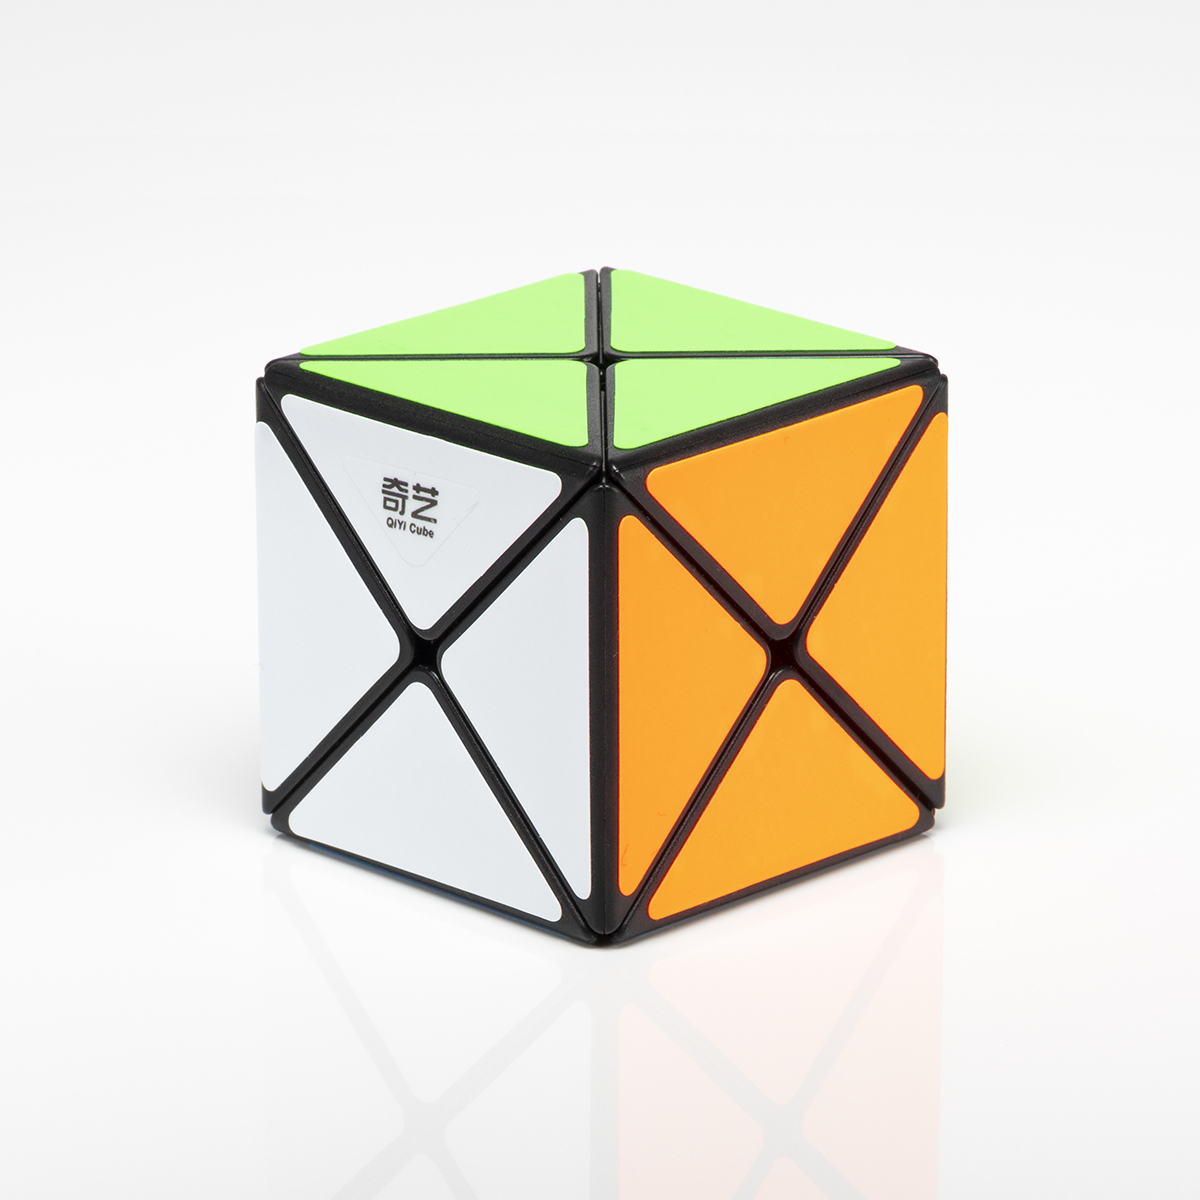 Cube x3. QIYI MOFANGGE Axis Cube. Fluffy Cube 3x3 [QIYI MOFANGGE]. 1x1 Cube. Кубик QIYI MOFANGGE Infinity Cube Gold / 2 на 2, QIYI.